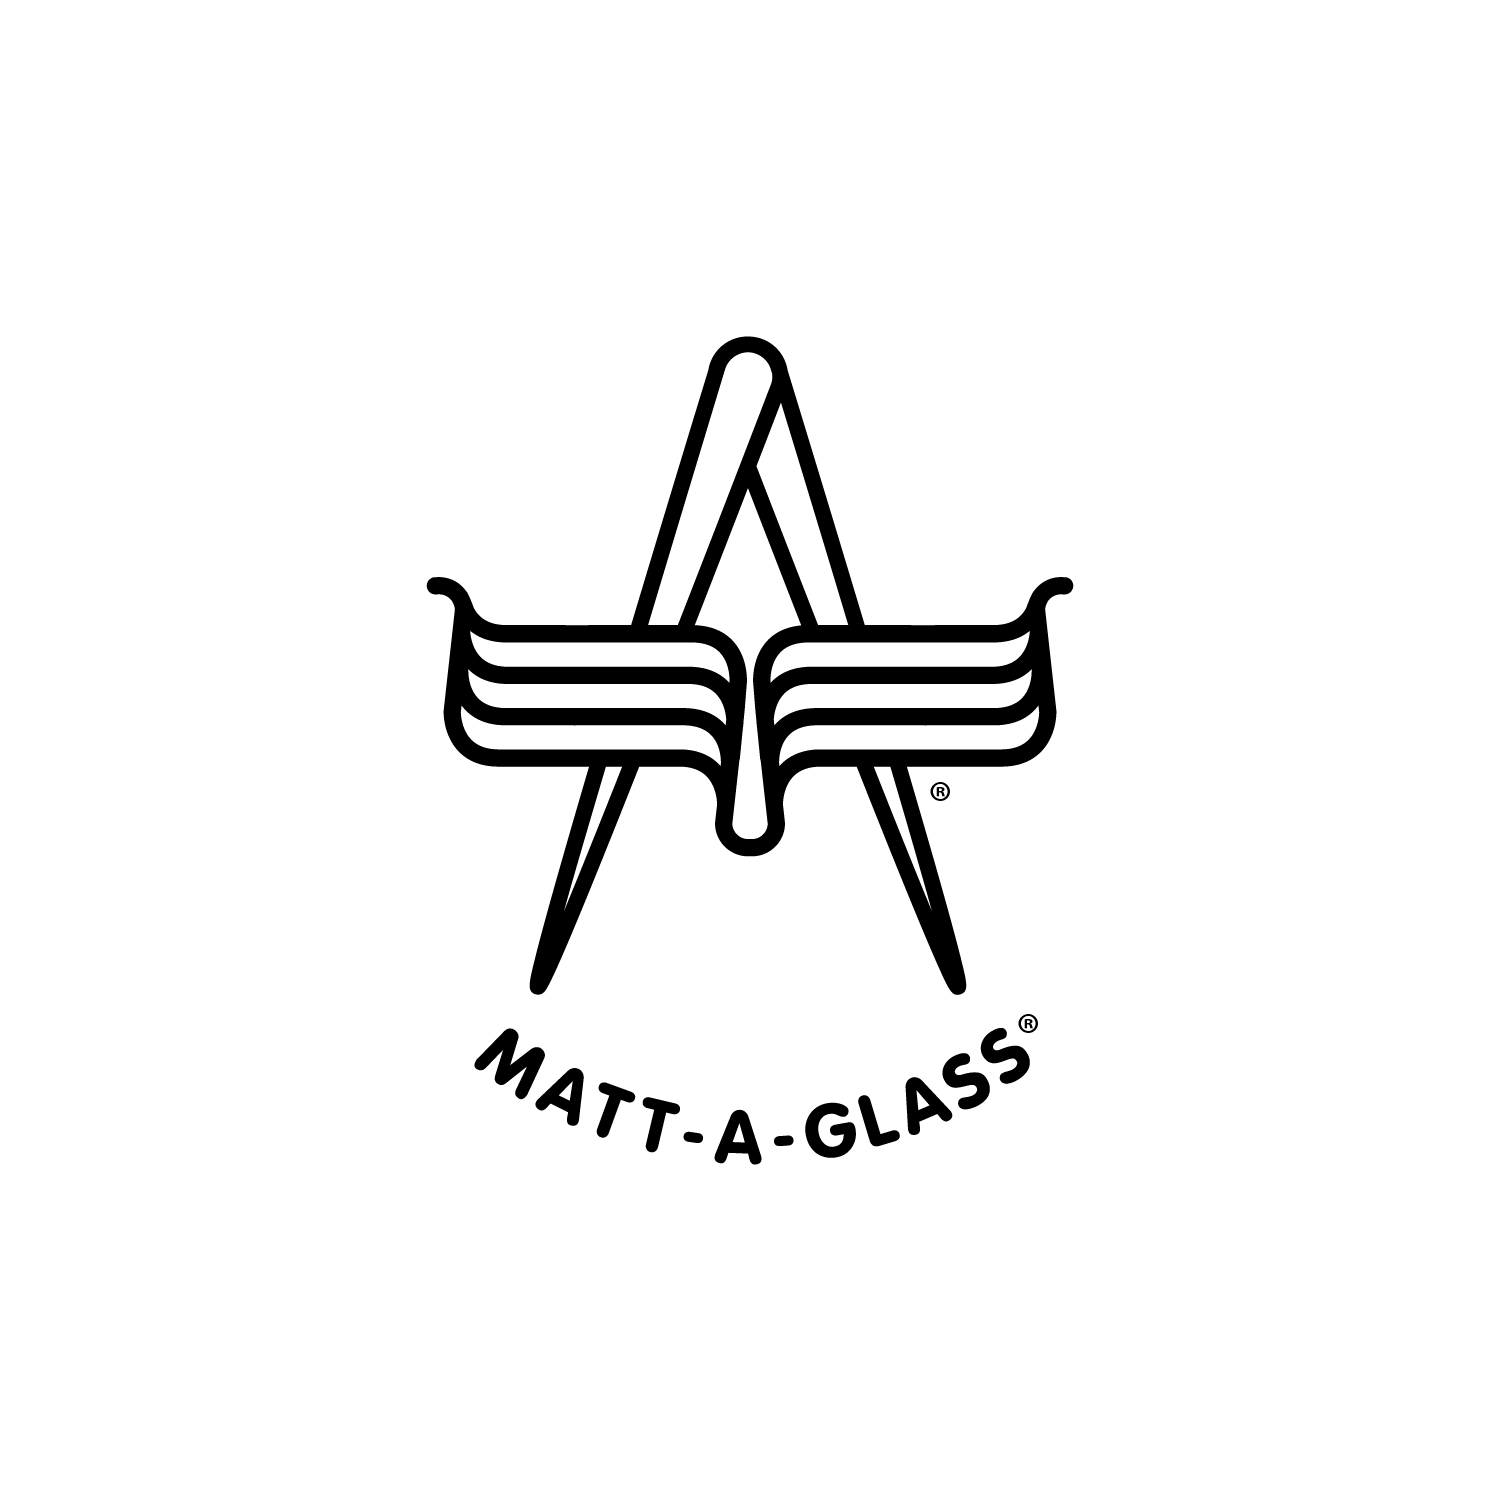 Matt A Glass logo by OLSON MCINTYRE